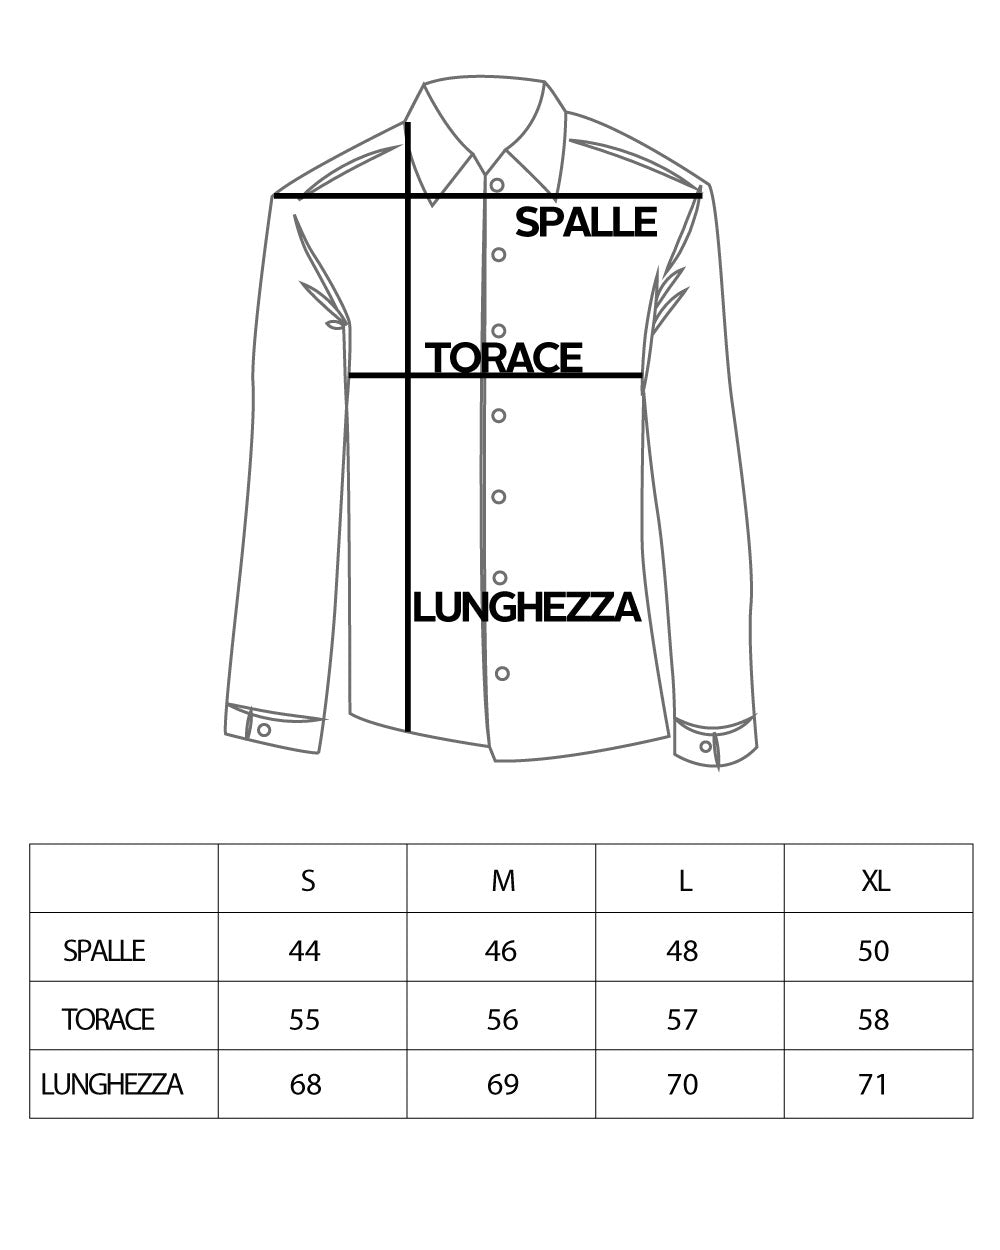 Camicia Uomo Con Colletto Giacca Sahariana Manica Lunga Cotone Verde GIOSAL-C2456A